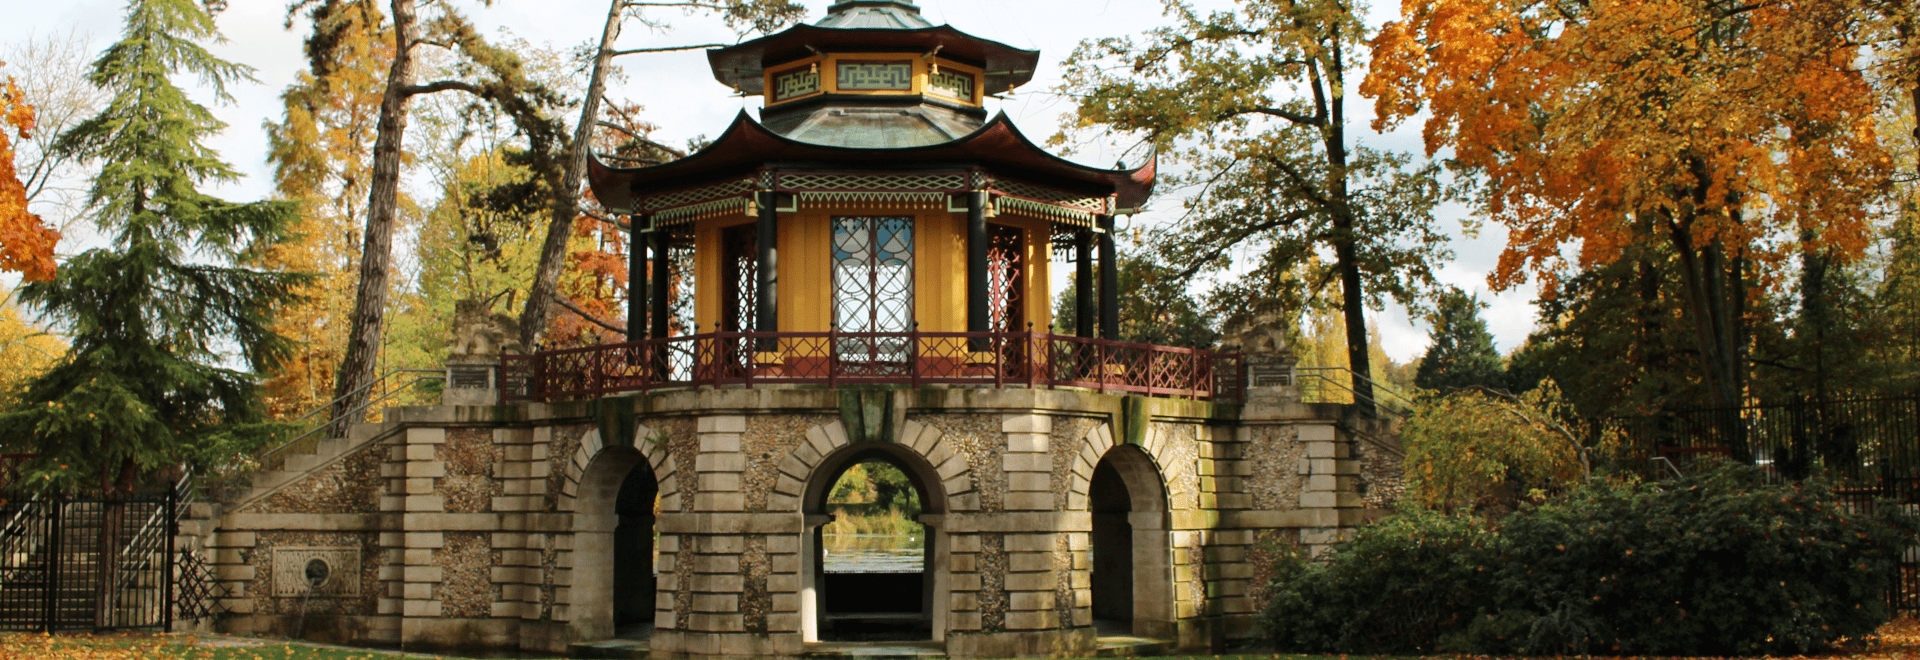 Automne - Pavillon Chinois